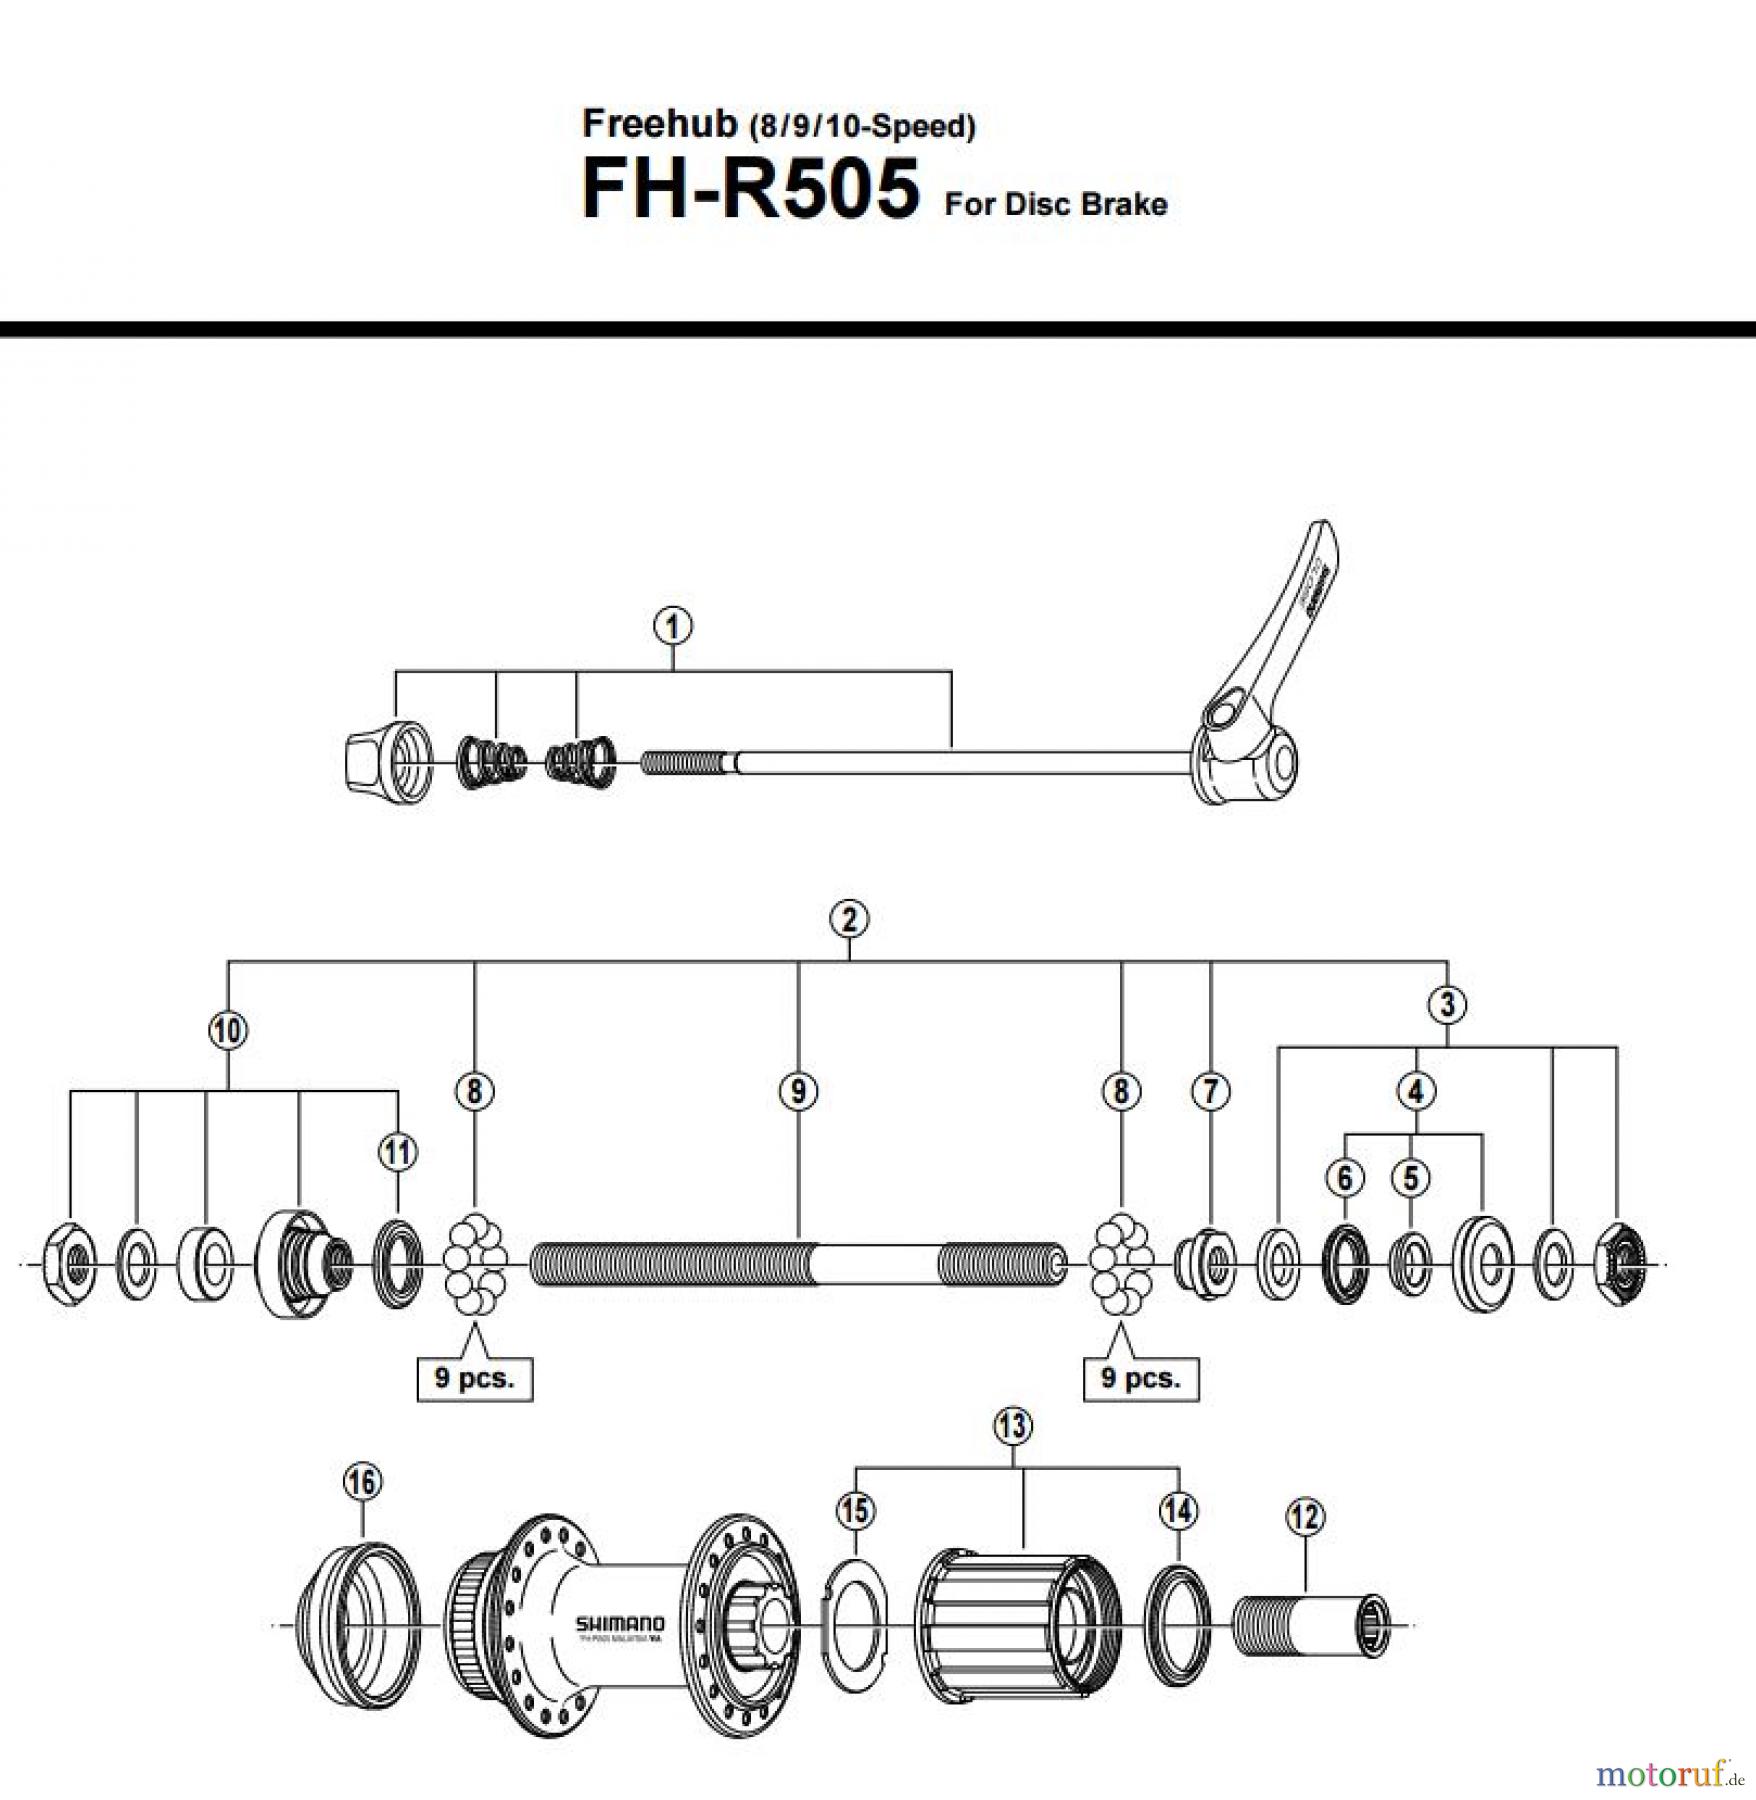  Shimano FH Free Hub - Freilaufnabe FH-R505 -New Dustcap